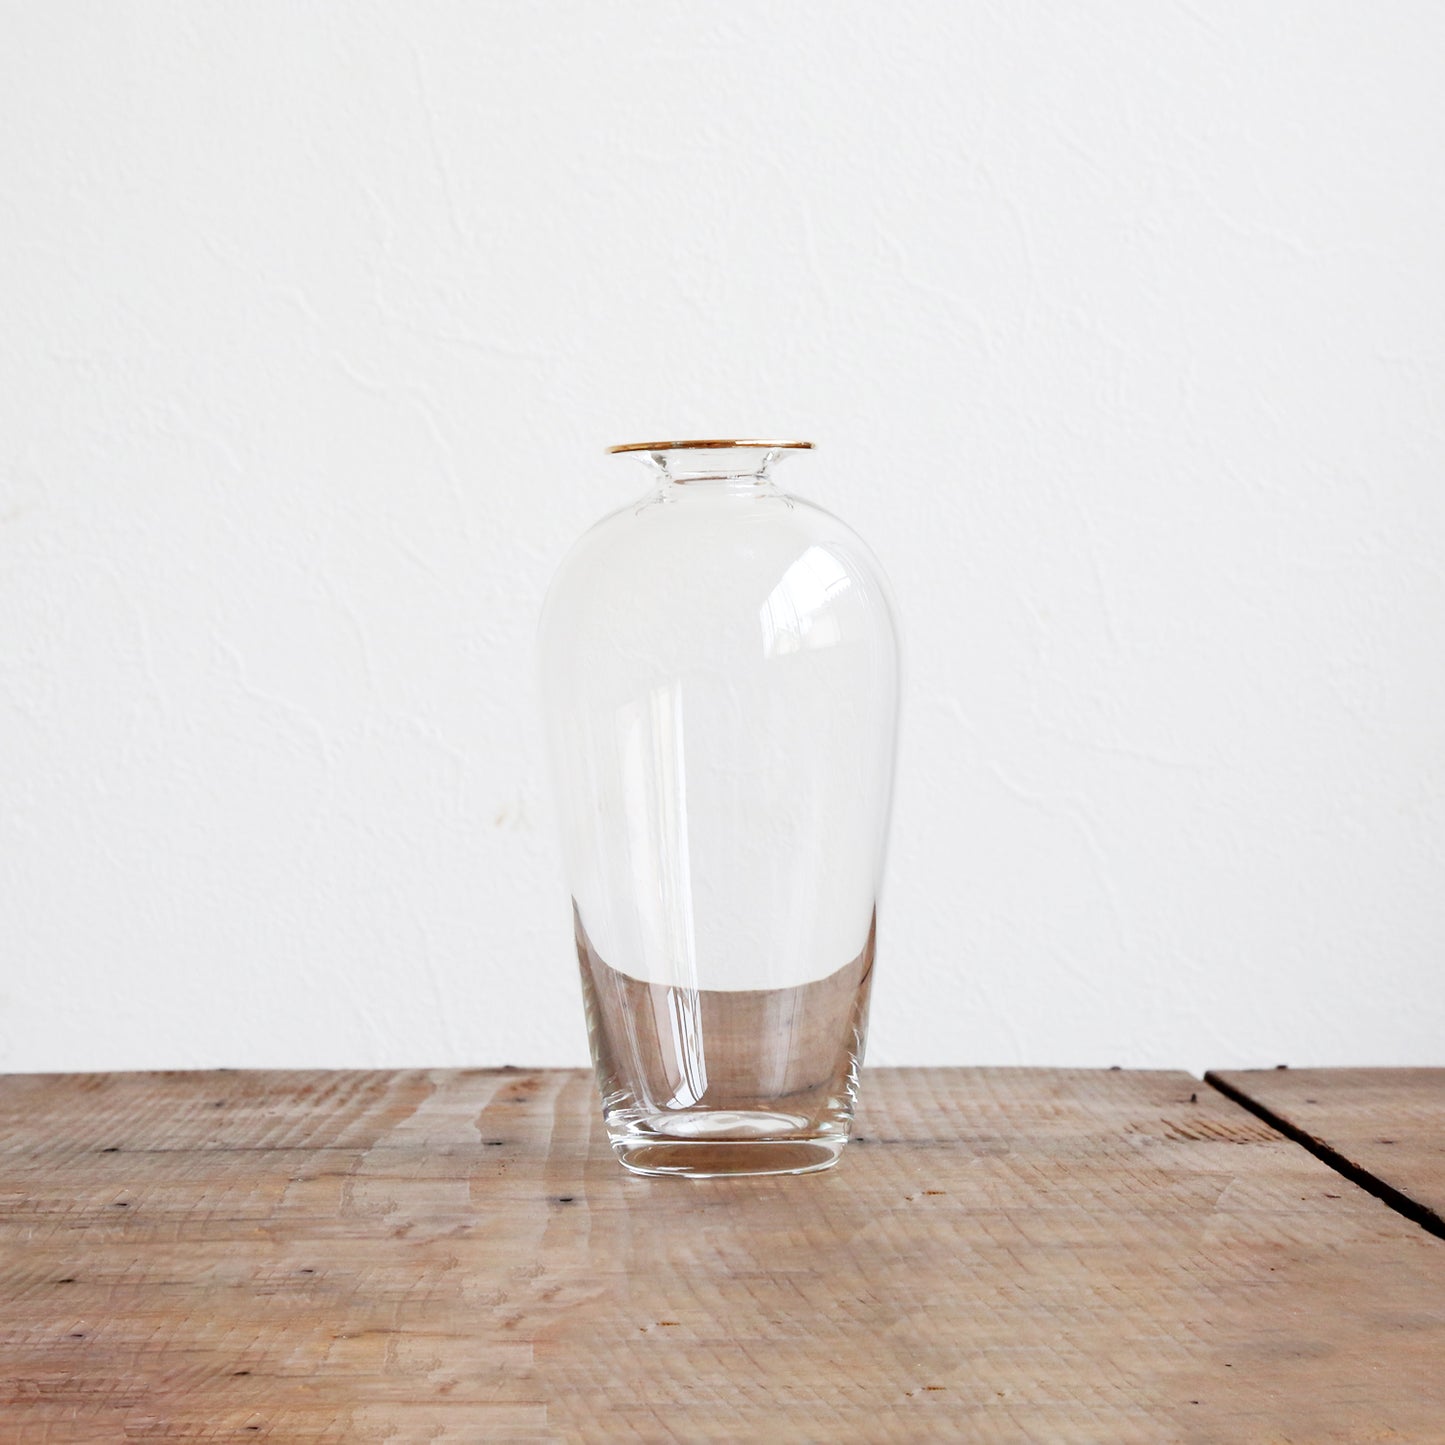 Taiga Oku handblown glass vase vessel